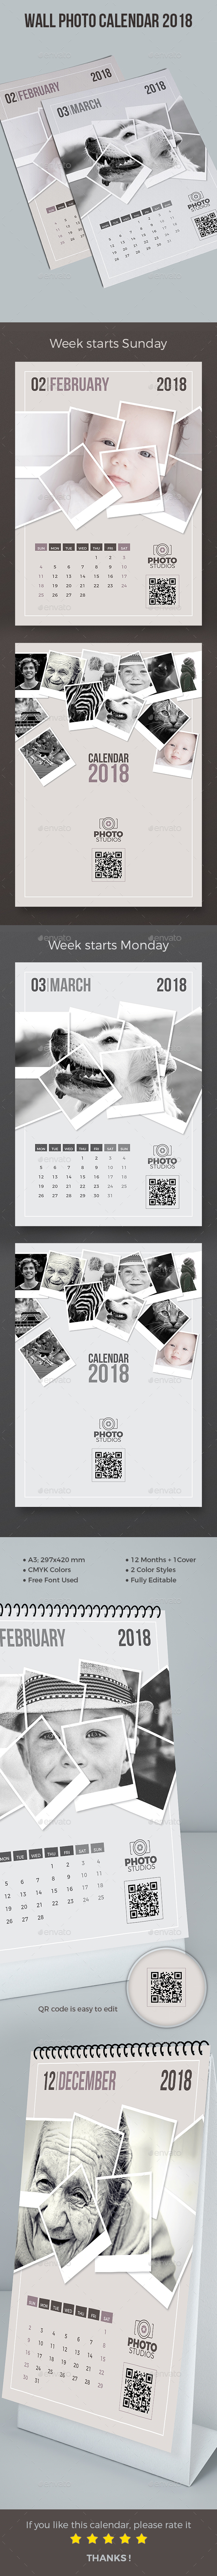 Wall Photo Calendar 2018